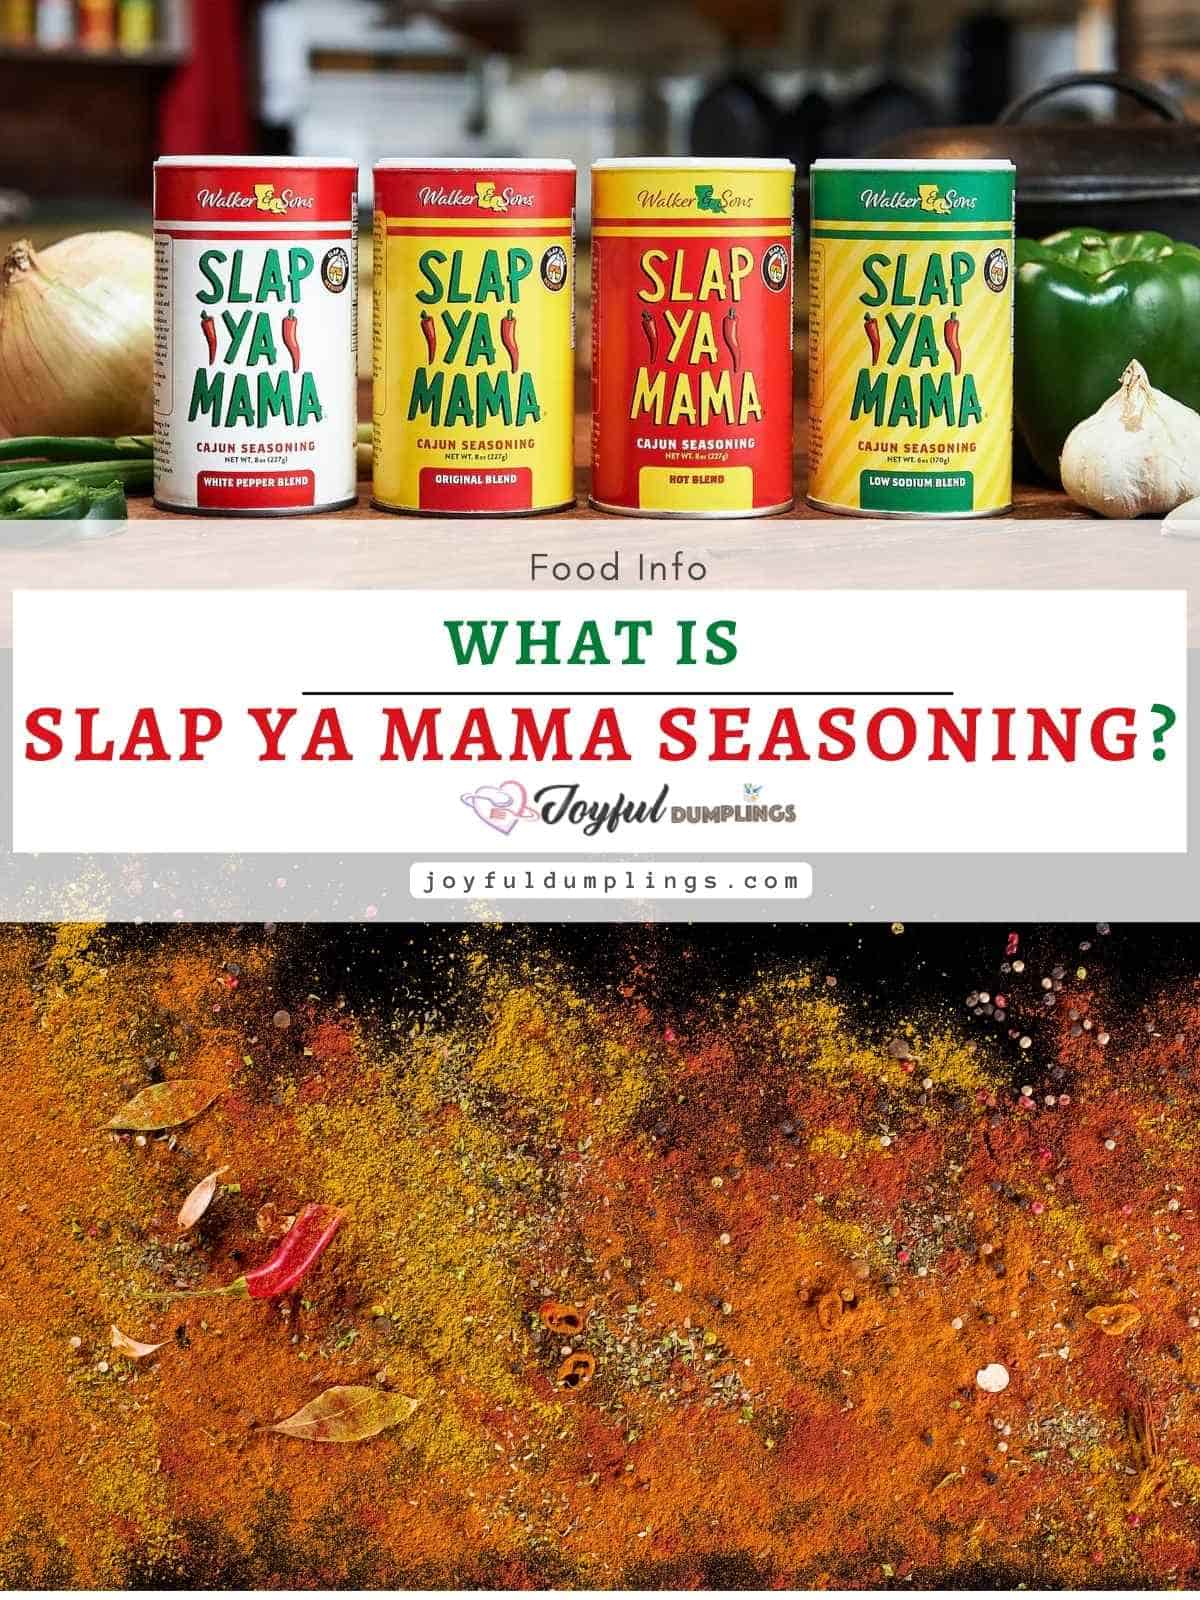 https://joyfuldumplings.com/wp-content/uploads/2022/12/slap-ya-mama-seasoning-min.jpg